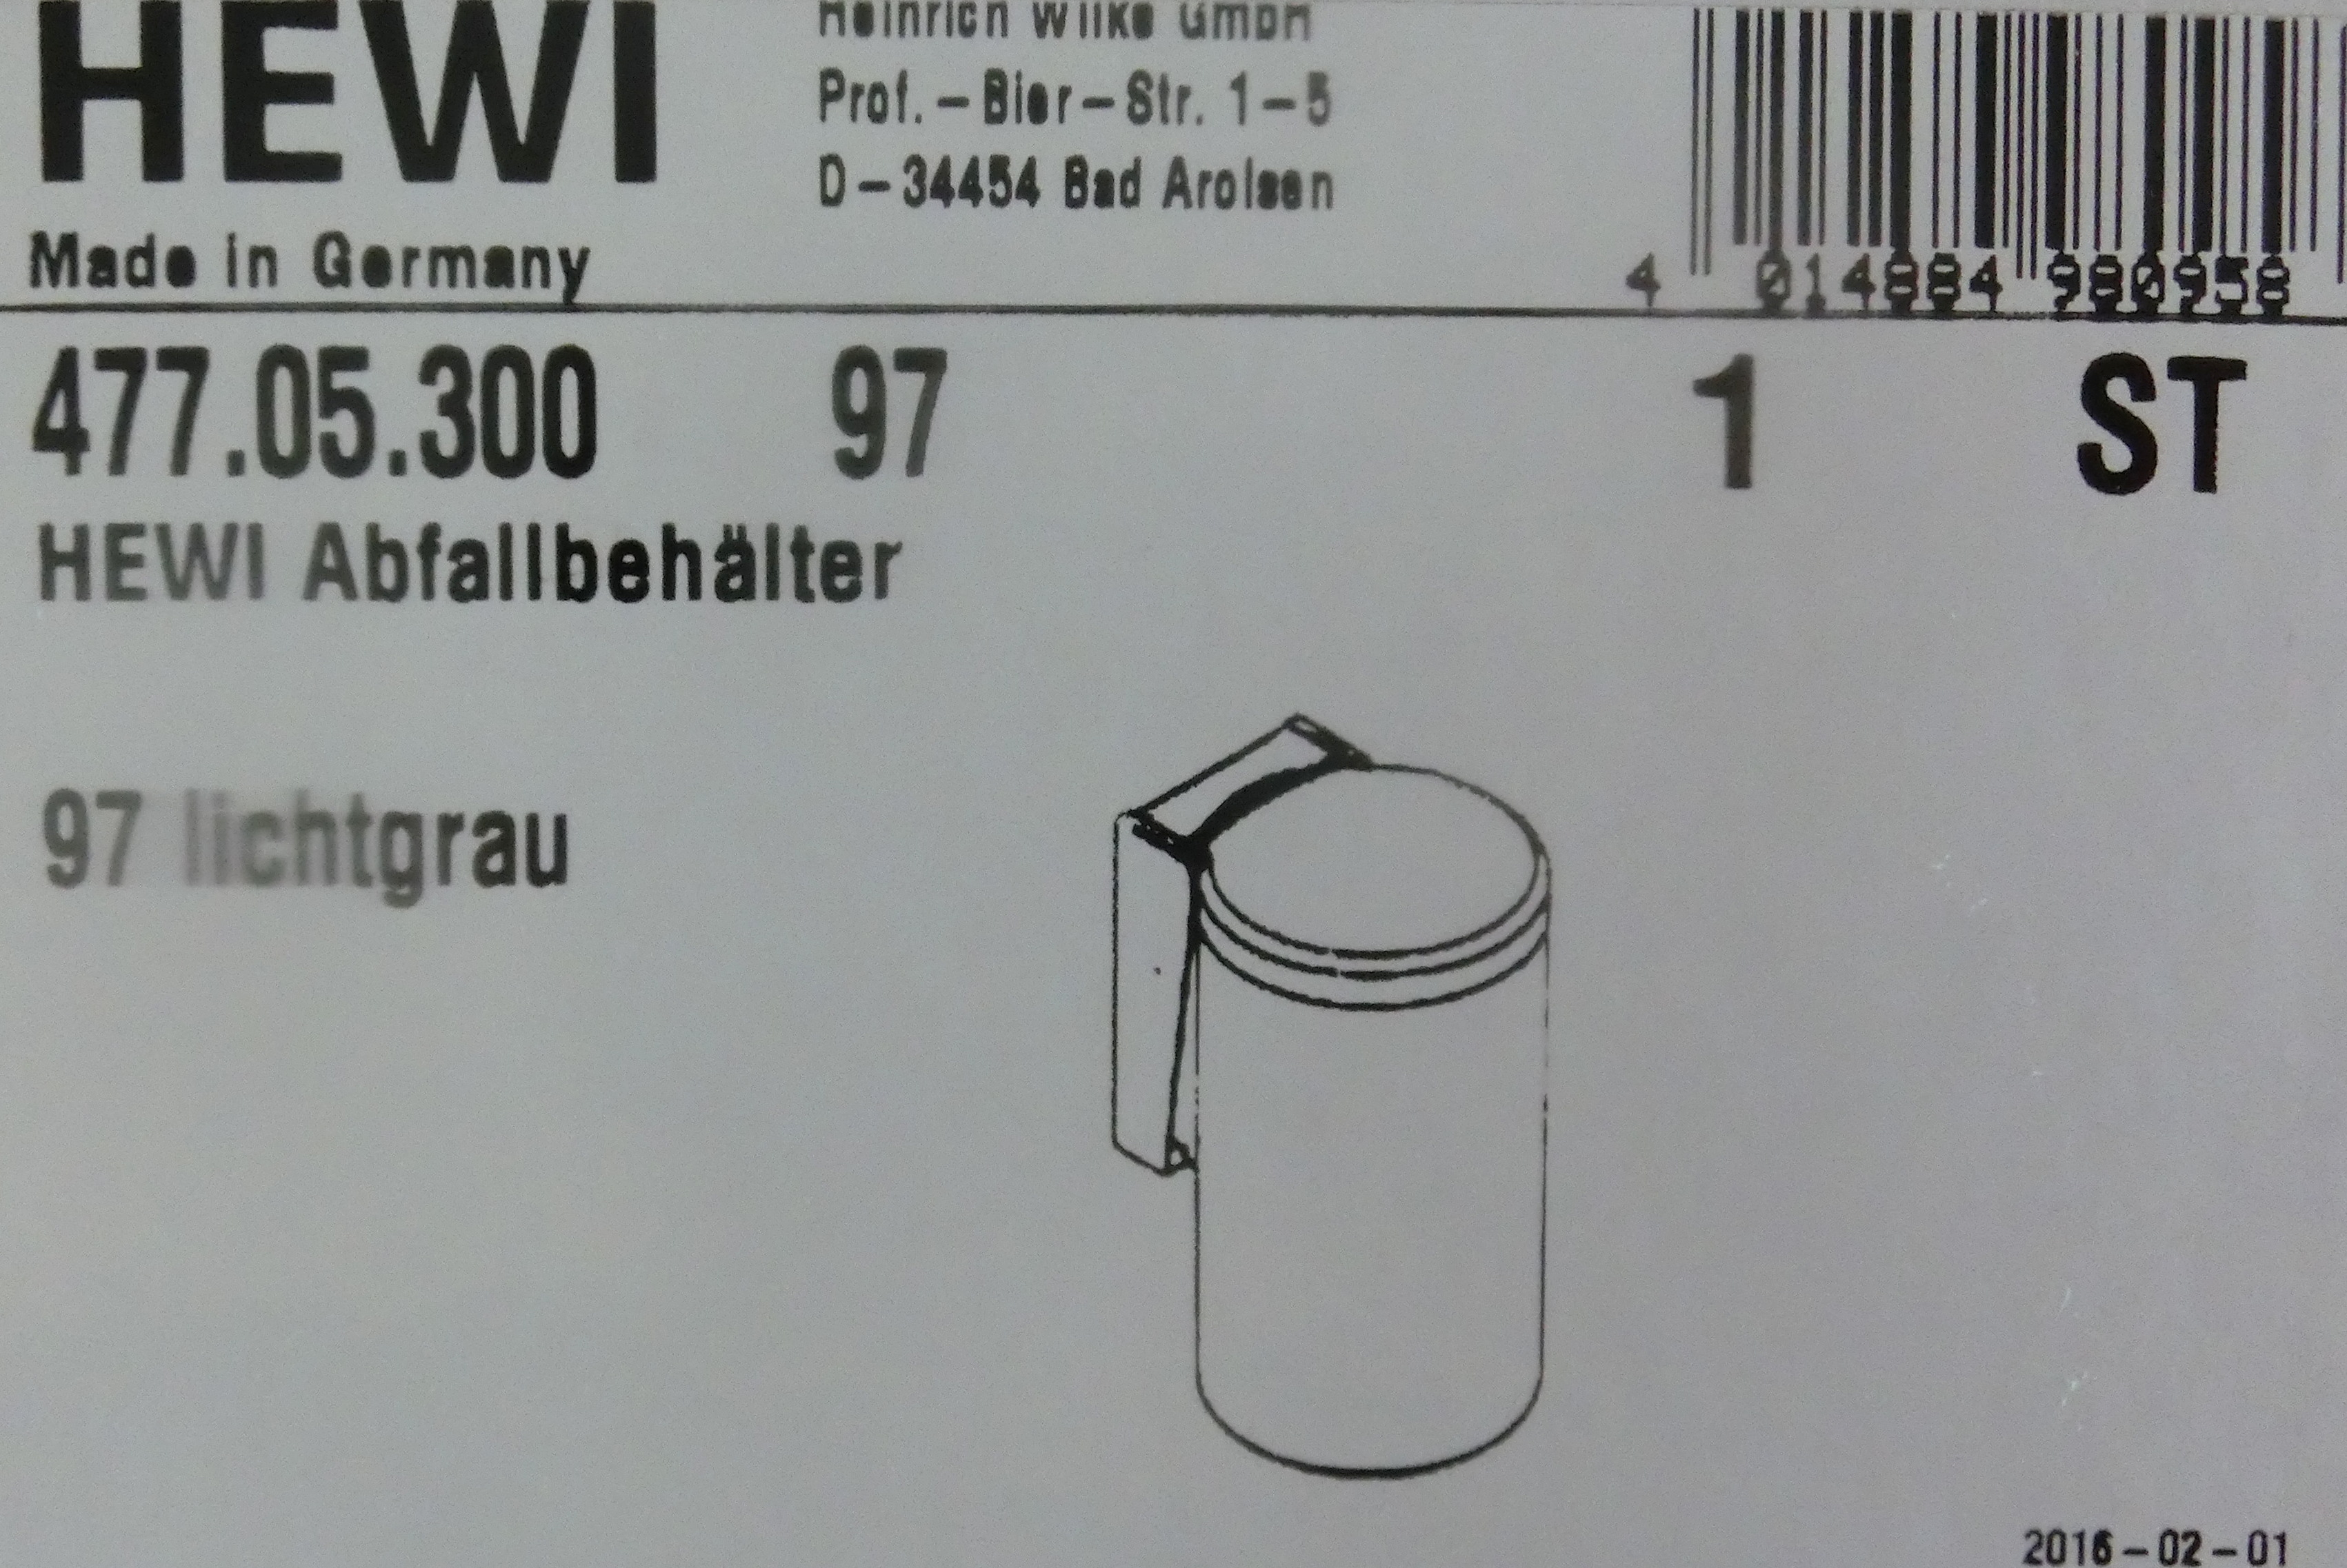 Hewi Serie 477 Abfallbehälter stahlblau; 477.05.300-50 